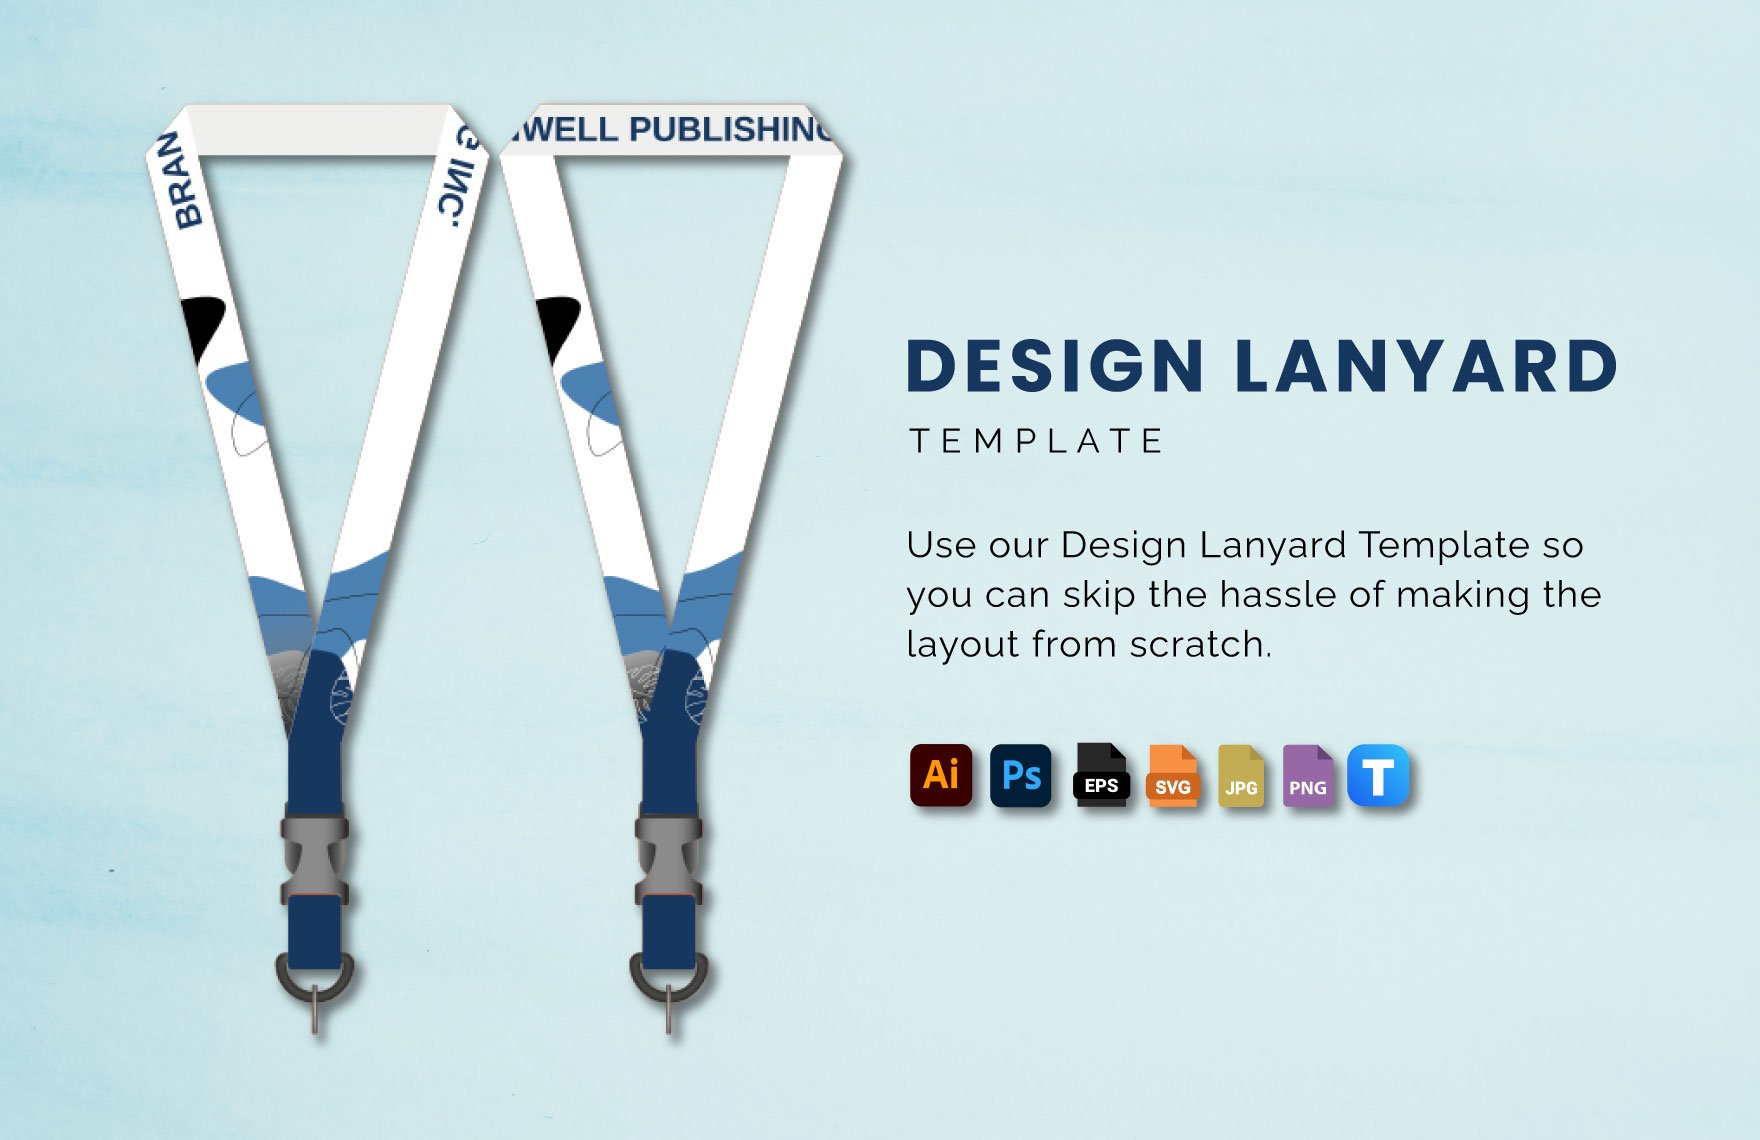 Design Lanyard Template in Illustrator, PSD, EPS, SVG, JPG, PNG